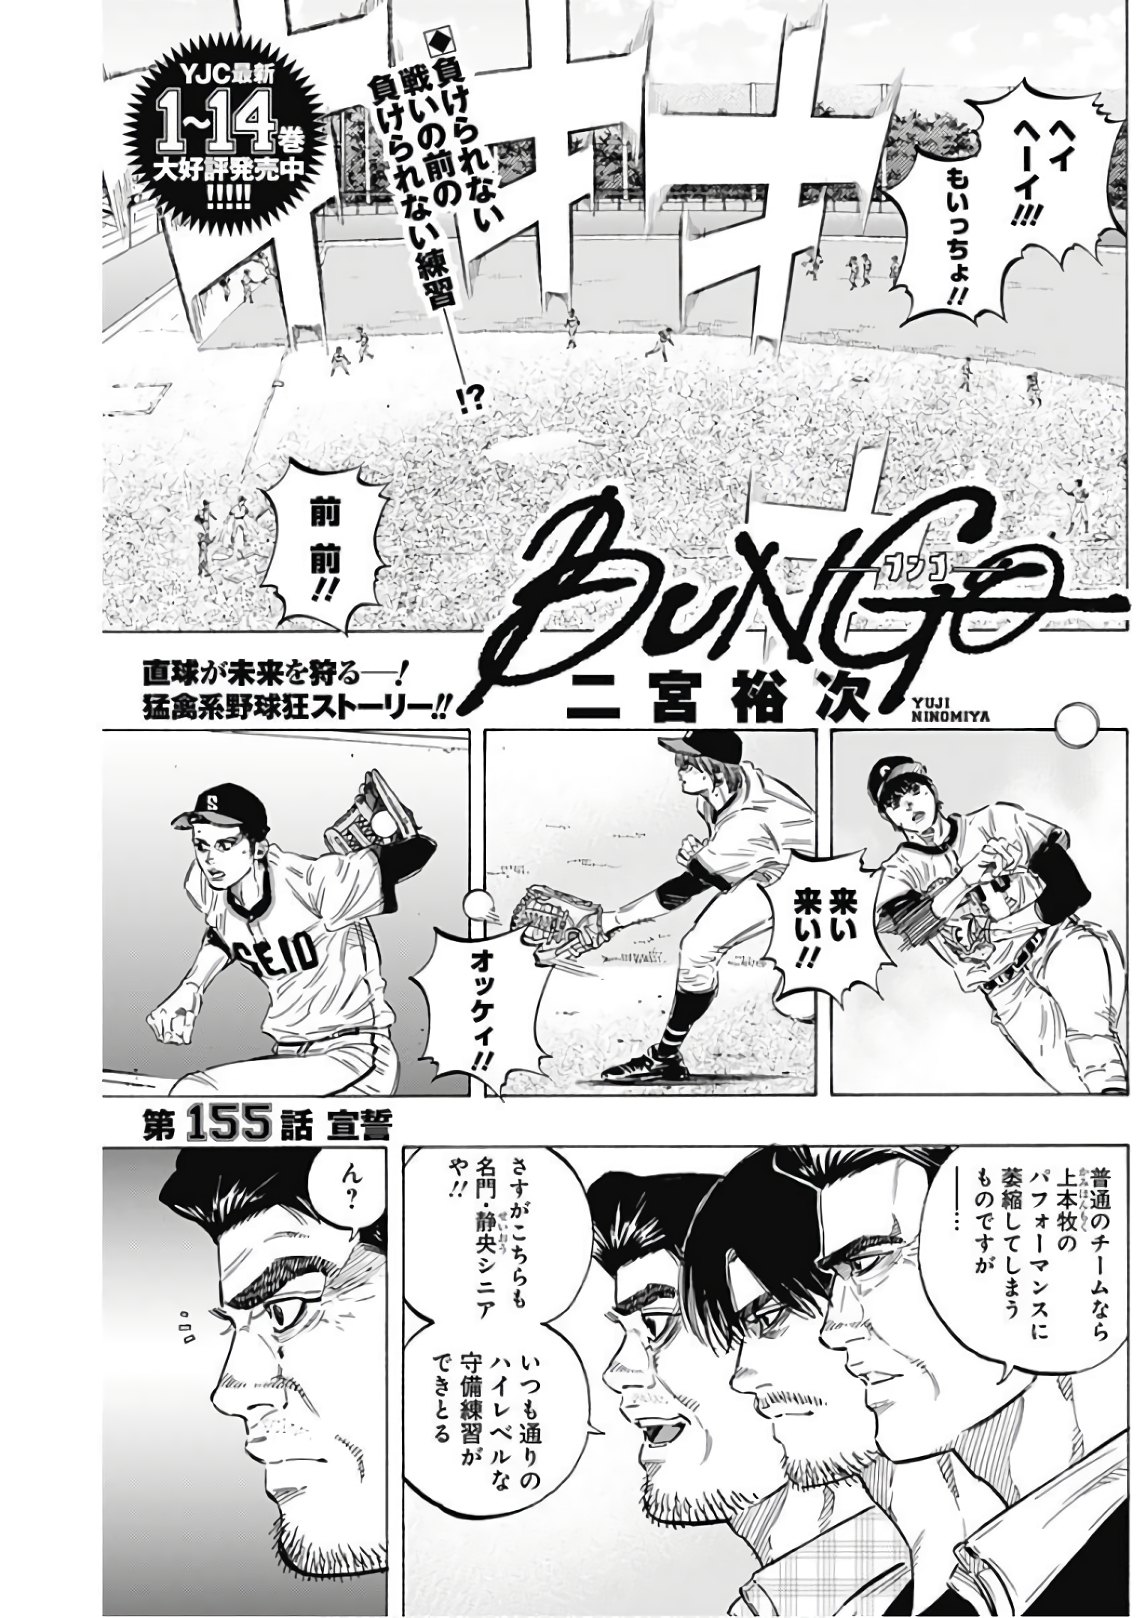 BUNGO-ブンゴ- 第155話 - Page 1